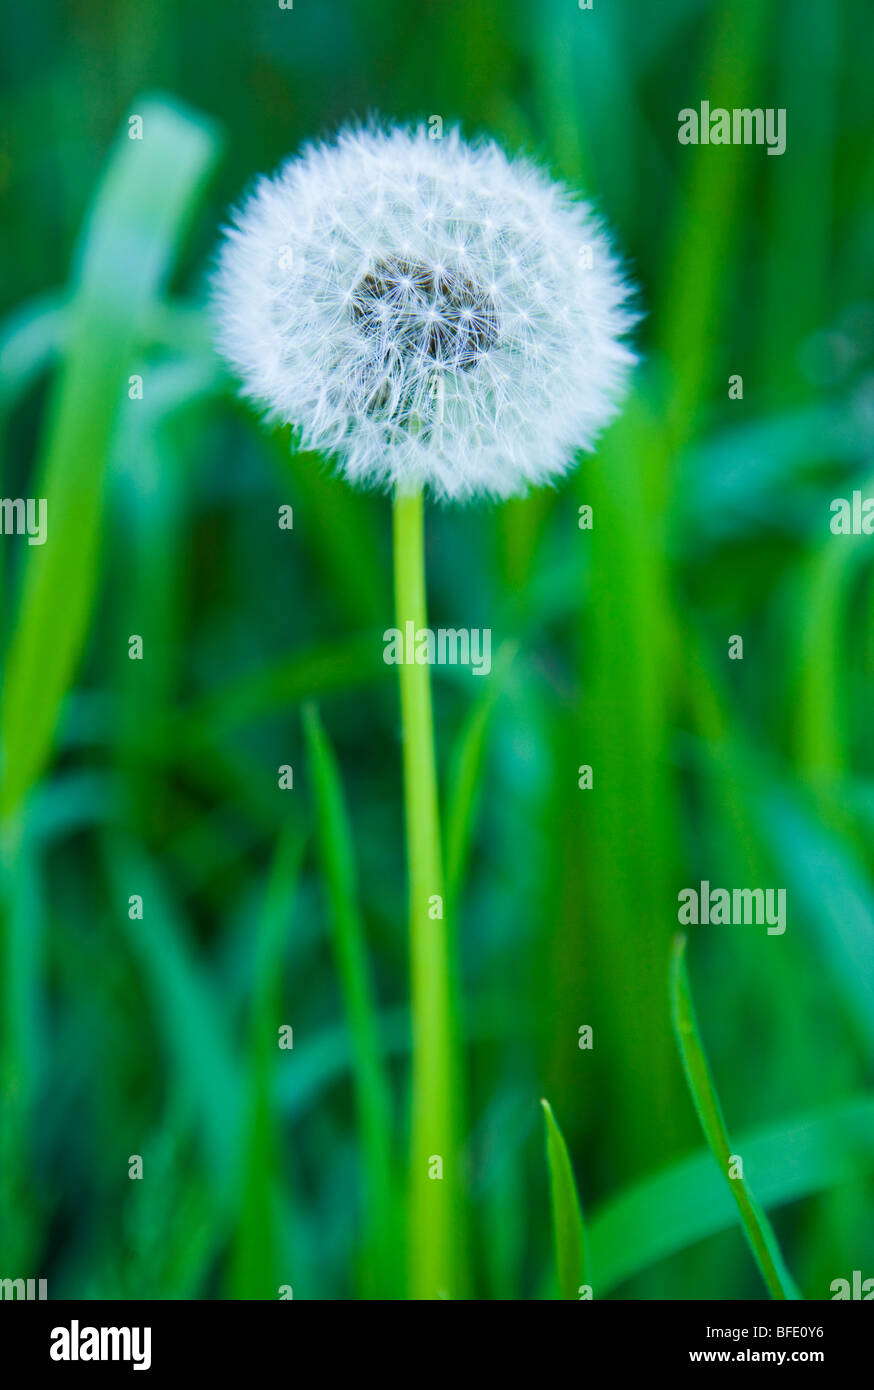 Closeup view of a single dandelion plant showing its achenes or dandelion clocks. Seattle, Washington, USA. Stock Photo